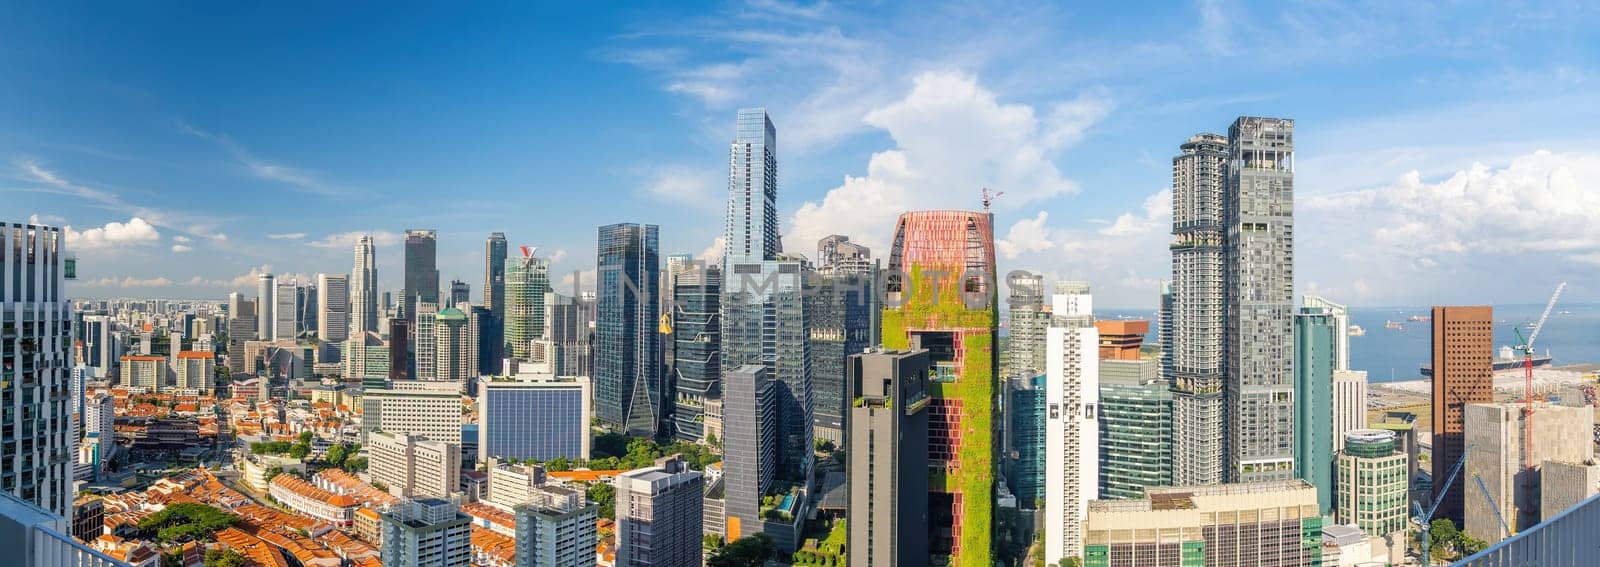 Downtown city skyline, cityscape of Singapore